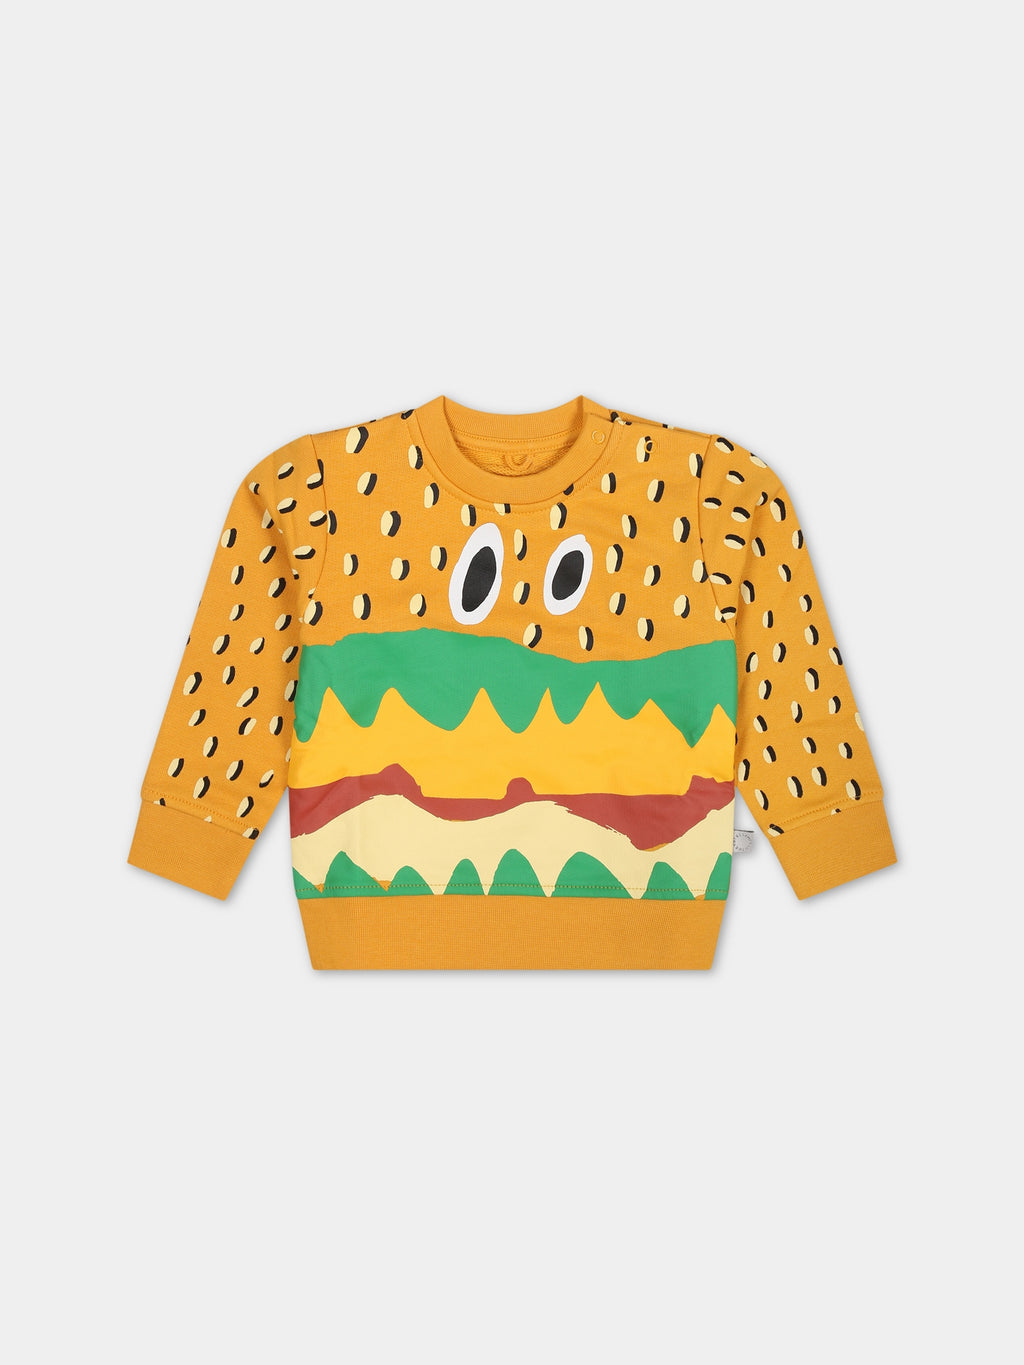 Sweat-shirt jaune pour bébé garçon avec imprimé hamburger